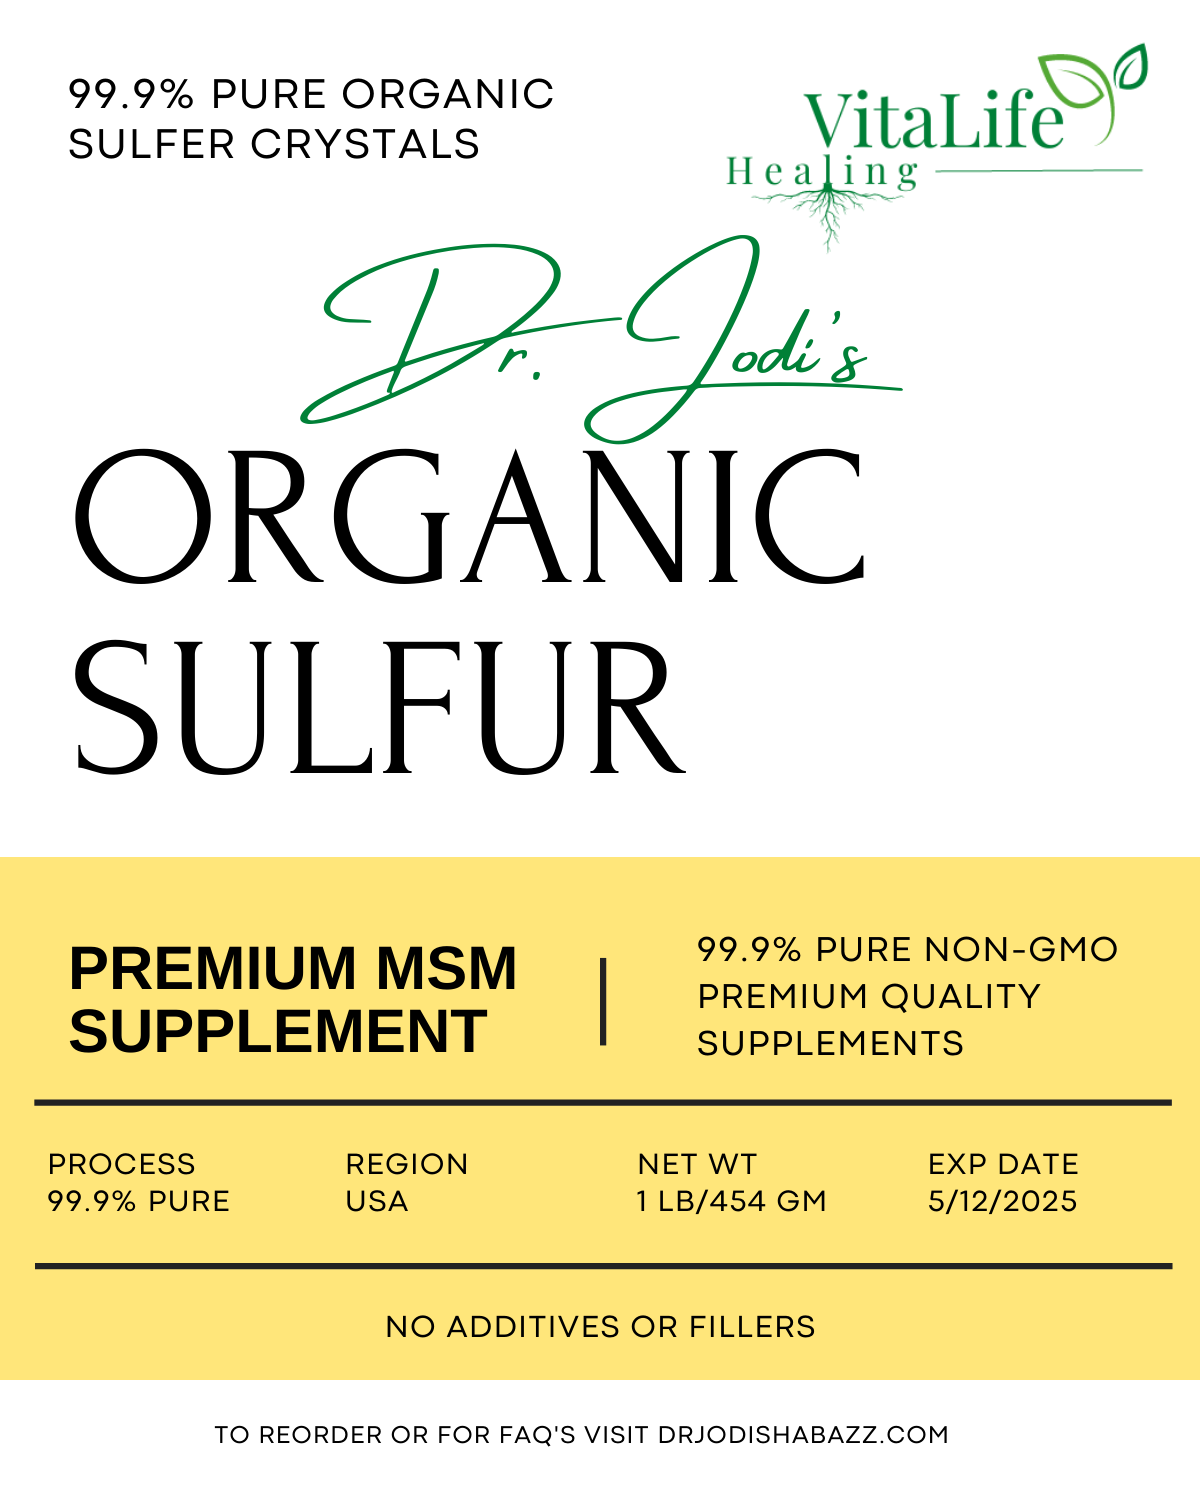 Dr Jodi's Pure Organic Sulfur Crystals